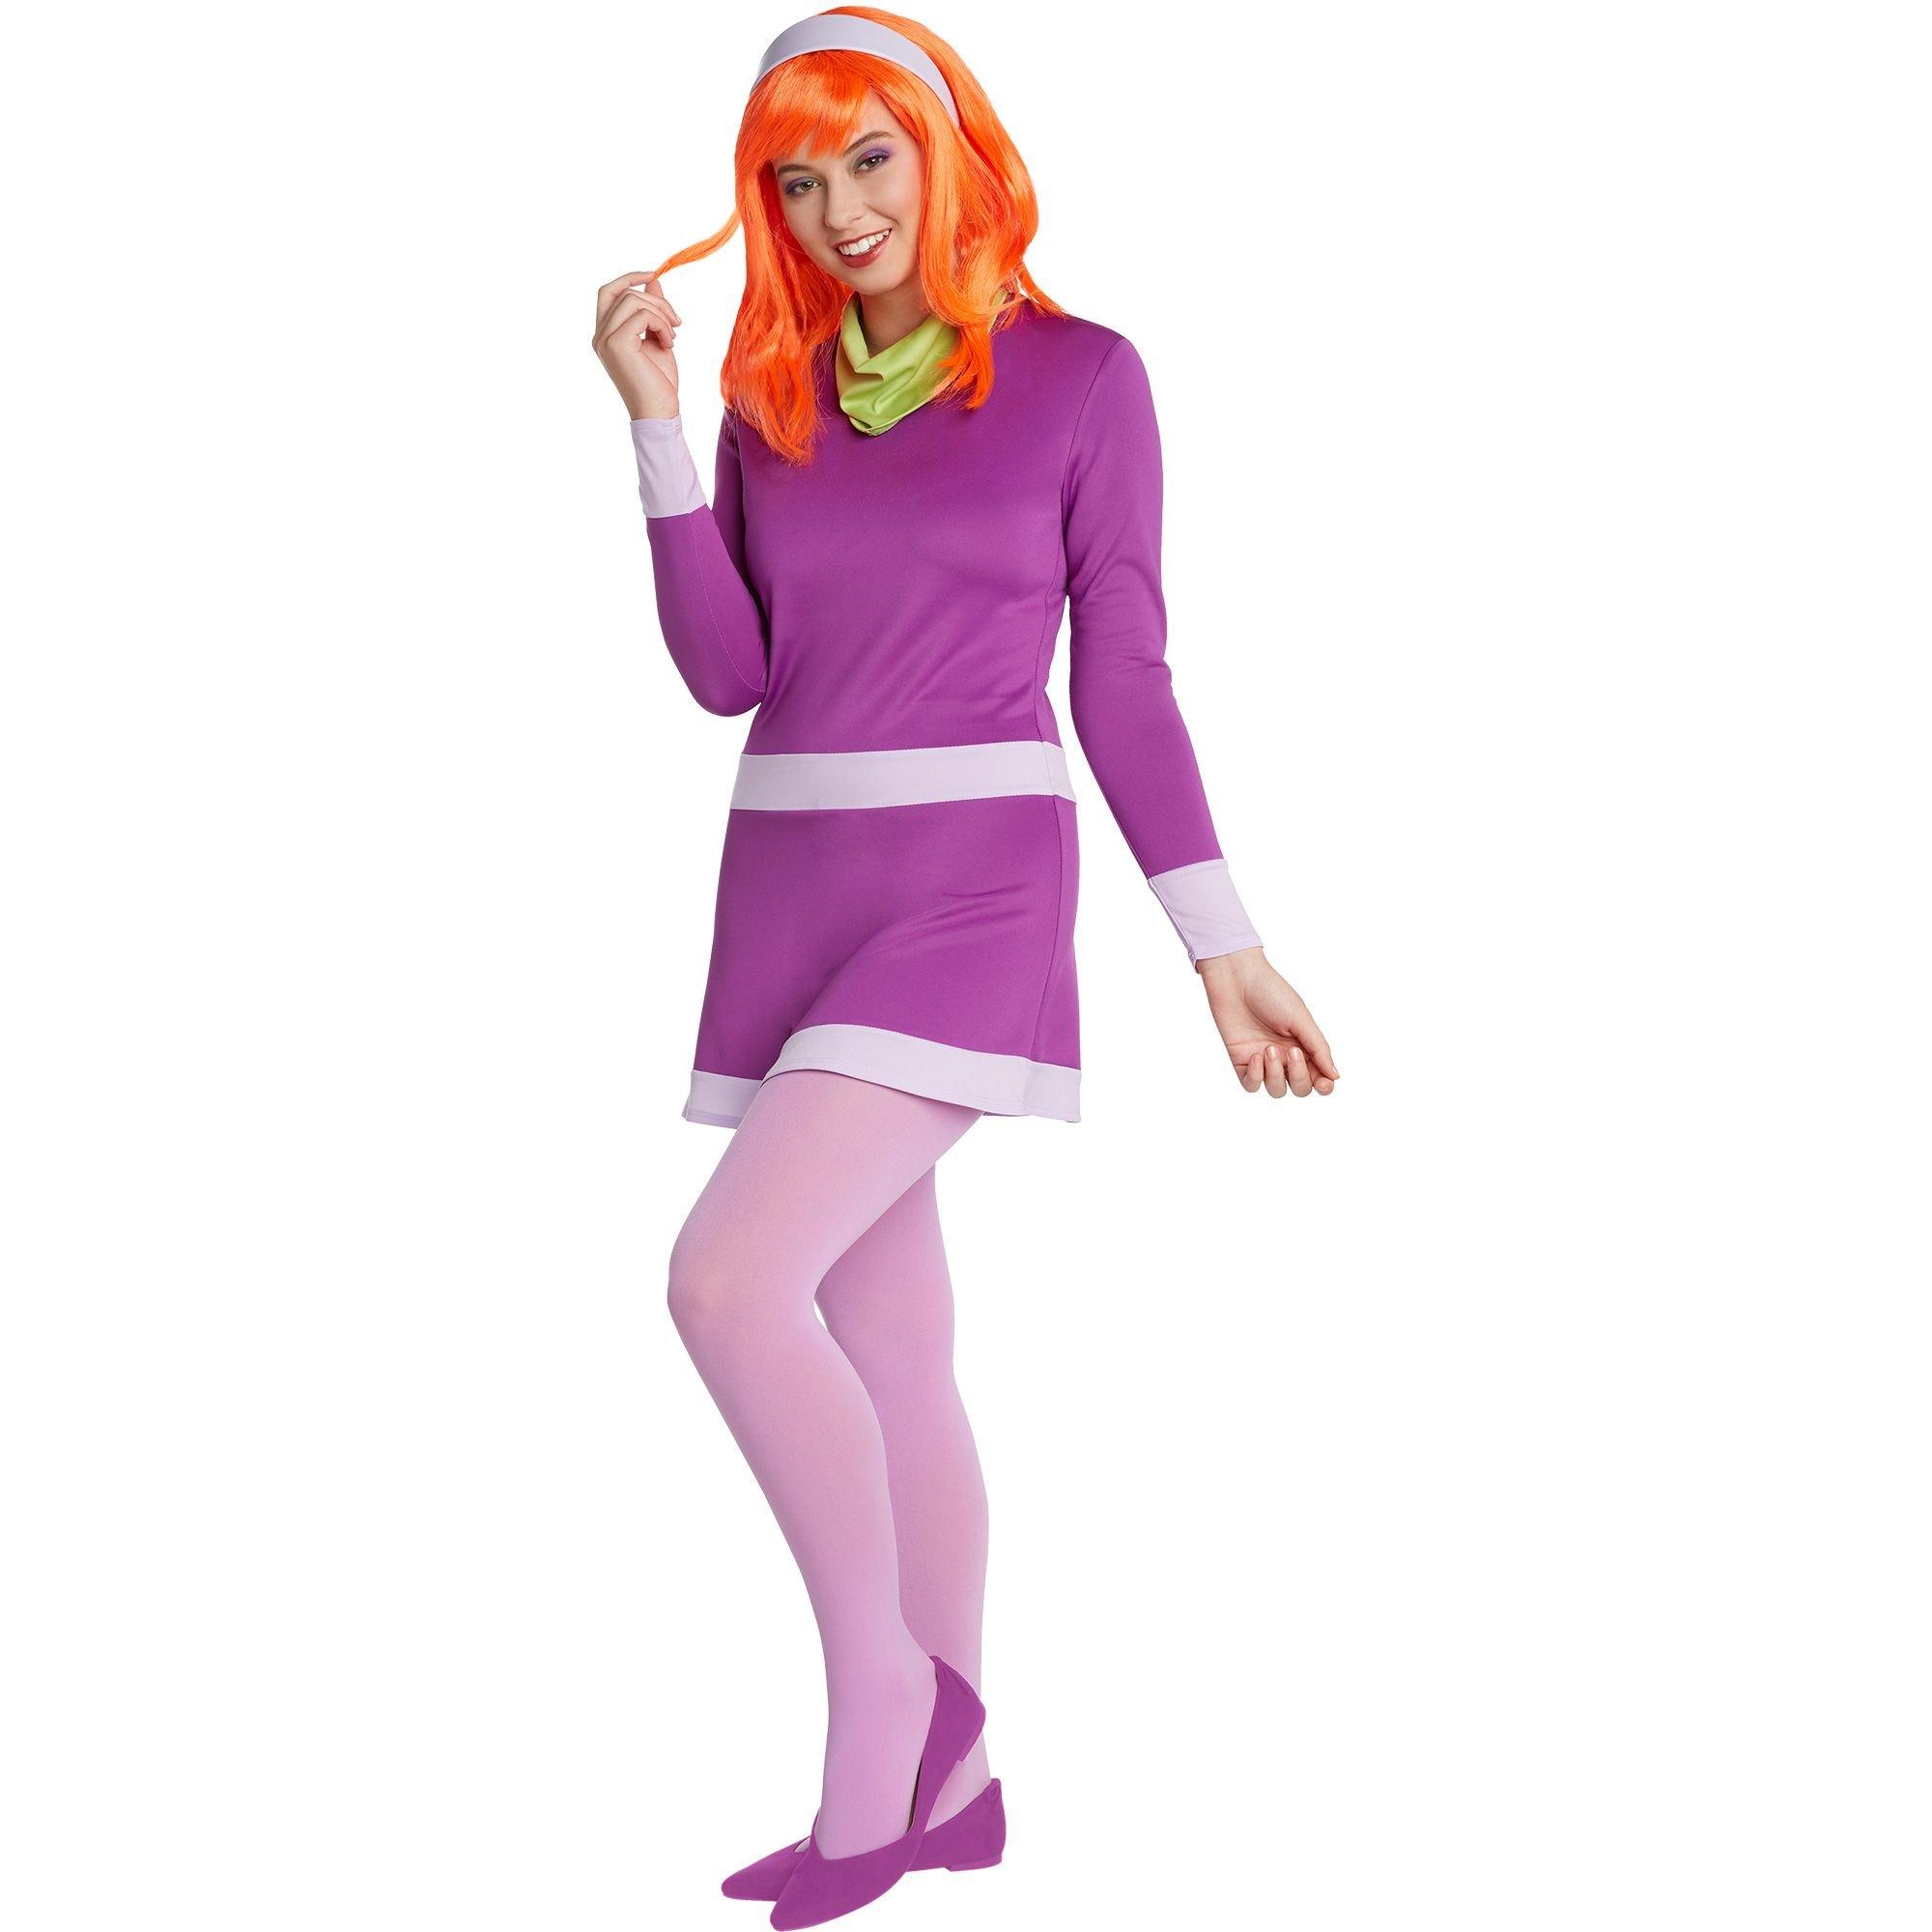 Scooby Doo Costumes - Velma, Daphne Costumes | Party City